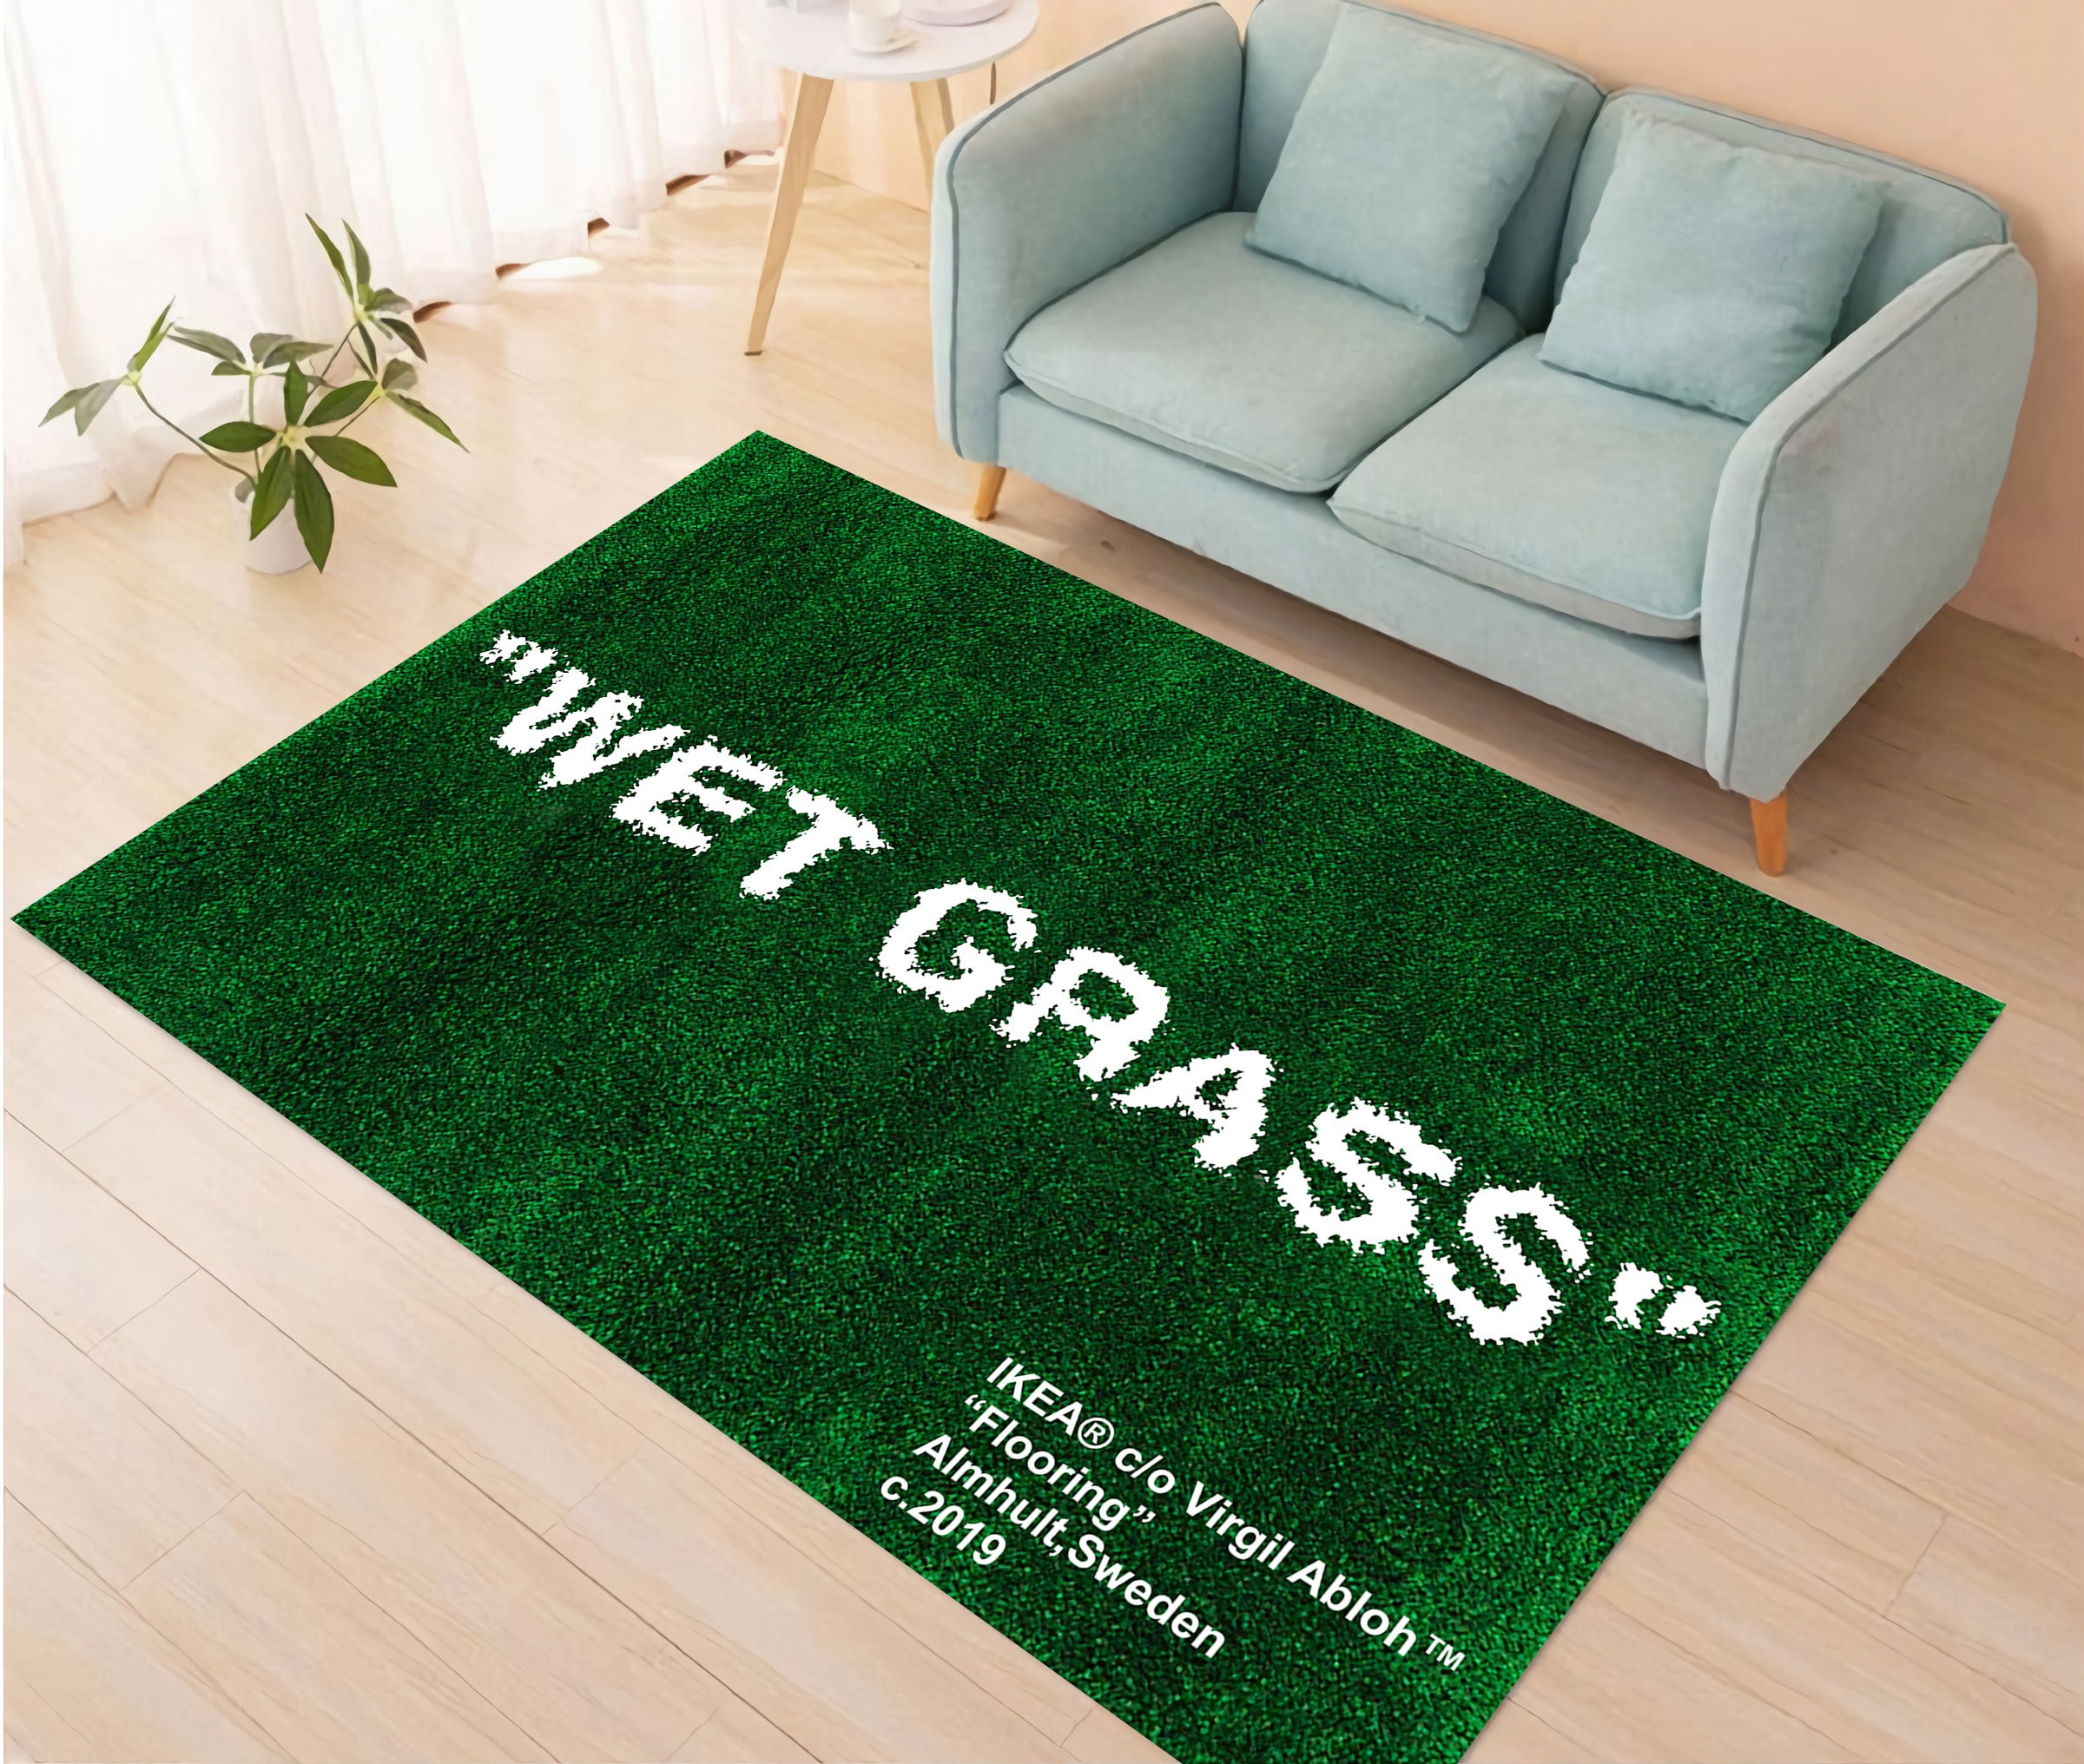 Home WET GRASS Rug Green Carpet Trend Home Plush Floor Furnishings